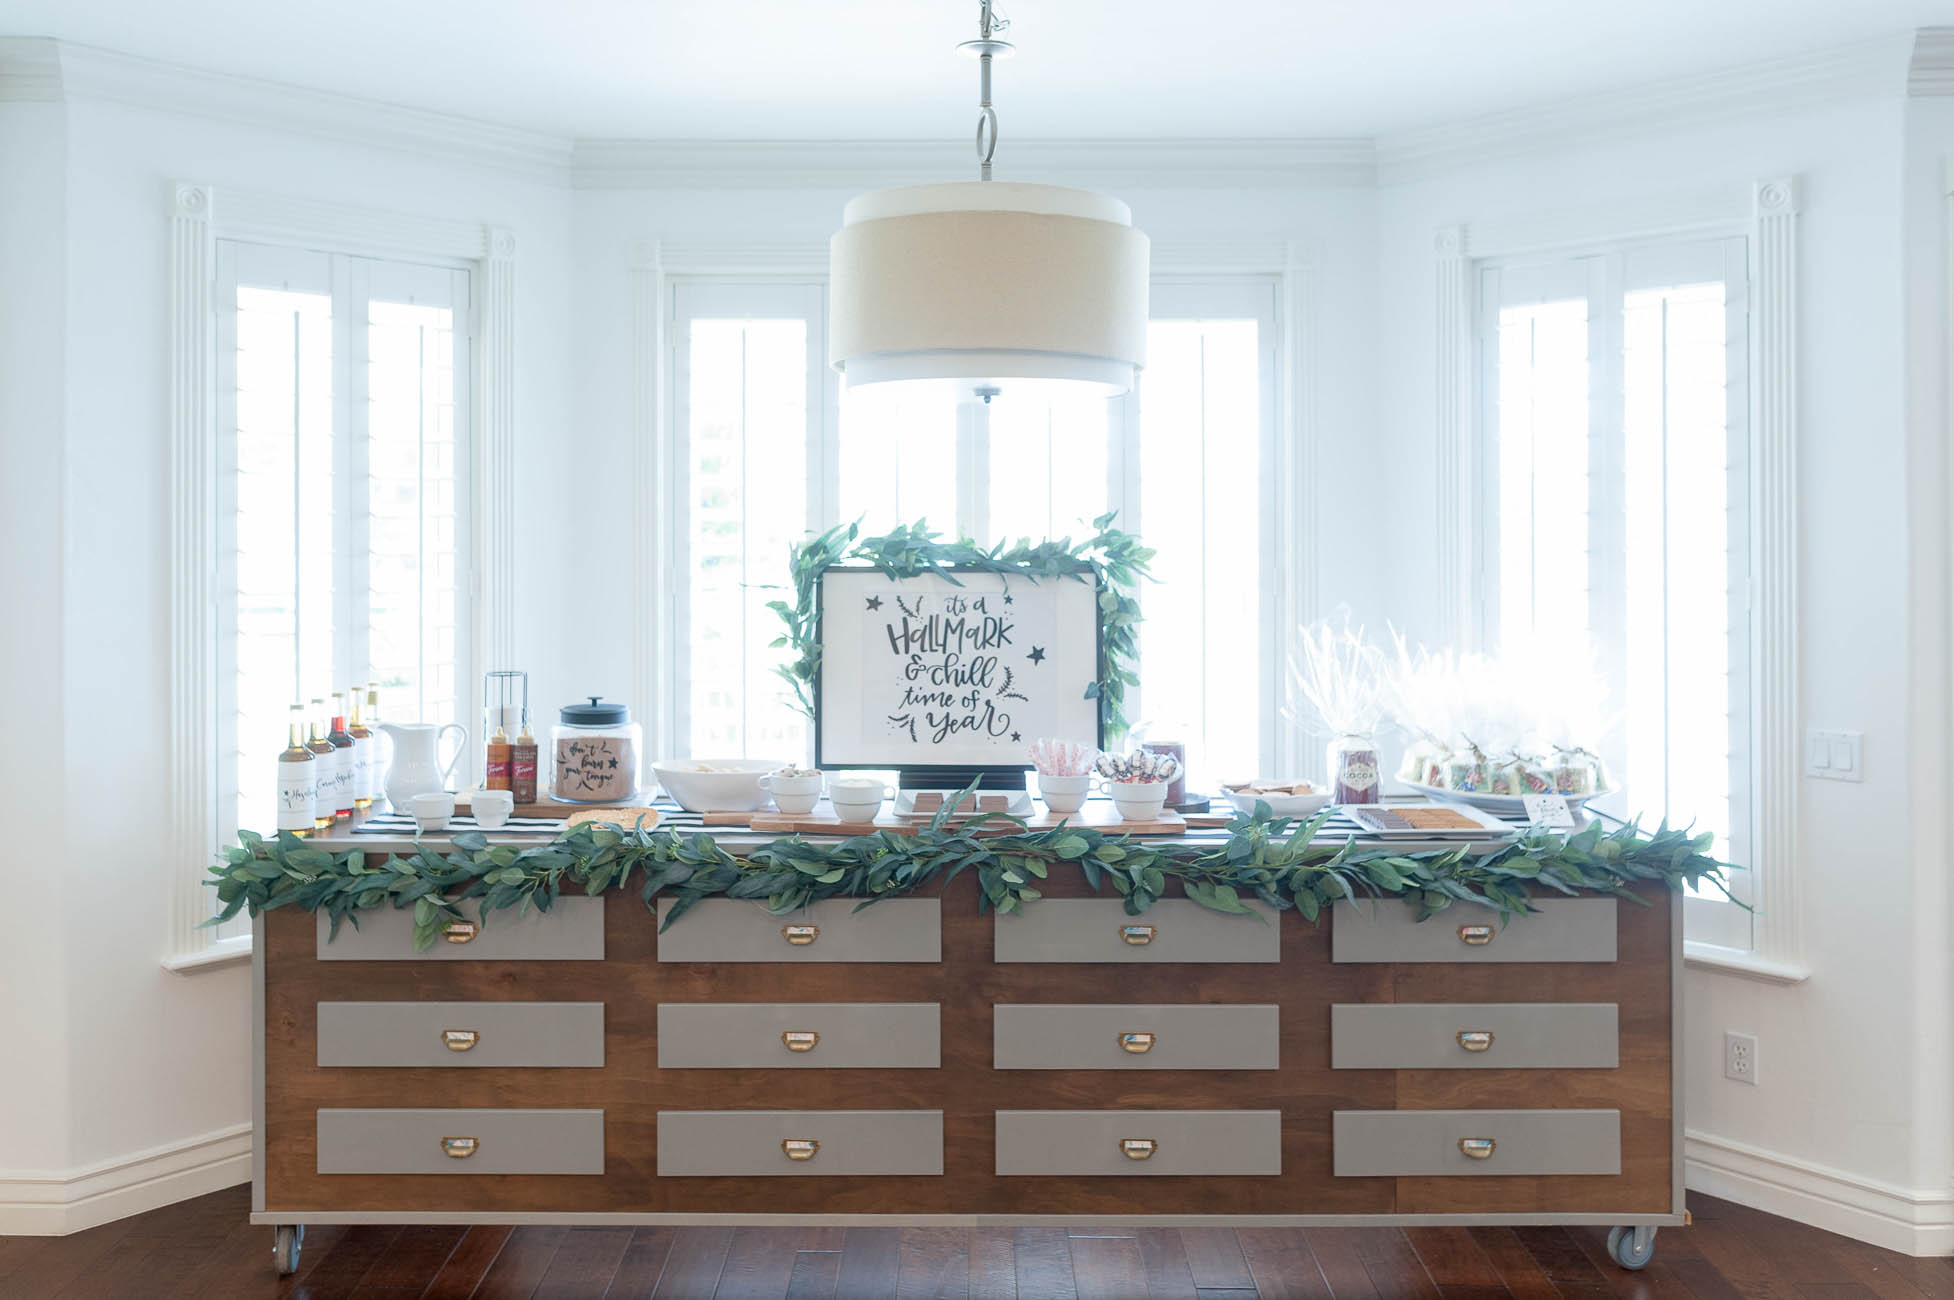 6 cute and creative DIY party decorations – Hallmark Ideas